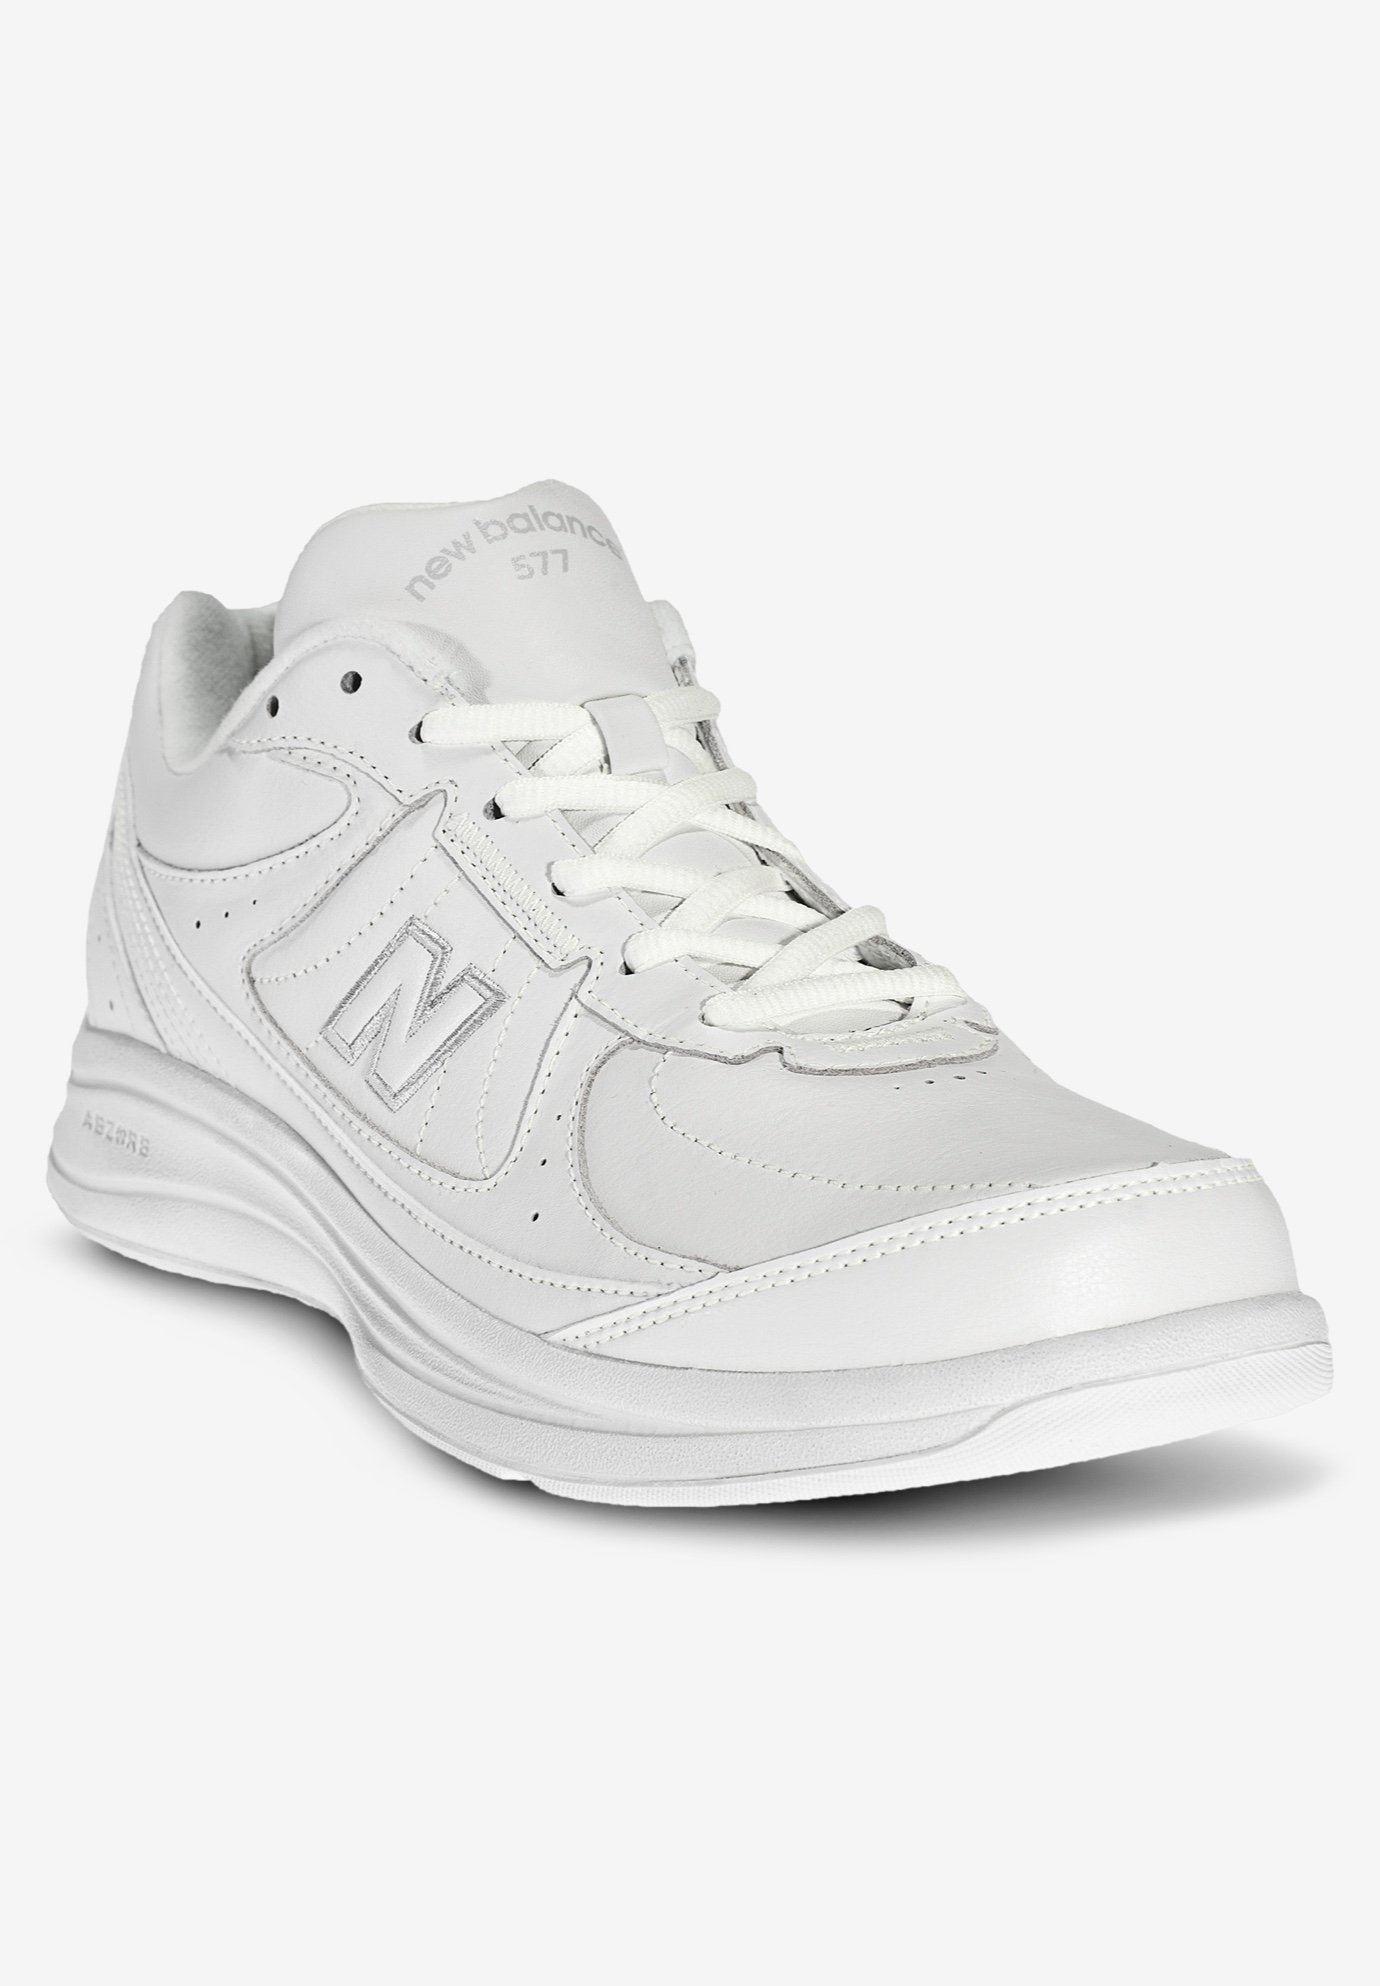 New Balance® 577 Lace-Up Walking Shoes | King Size